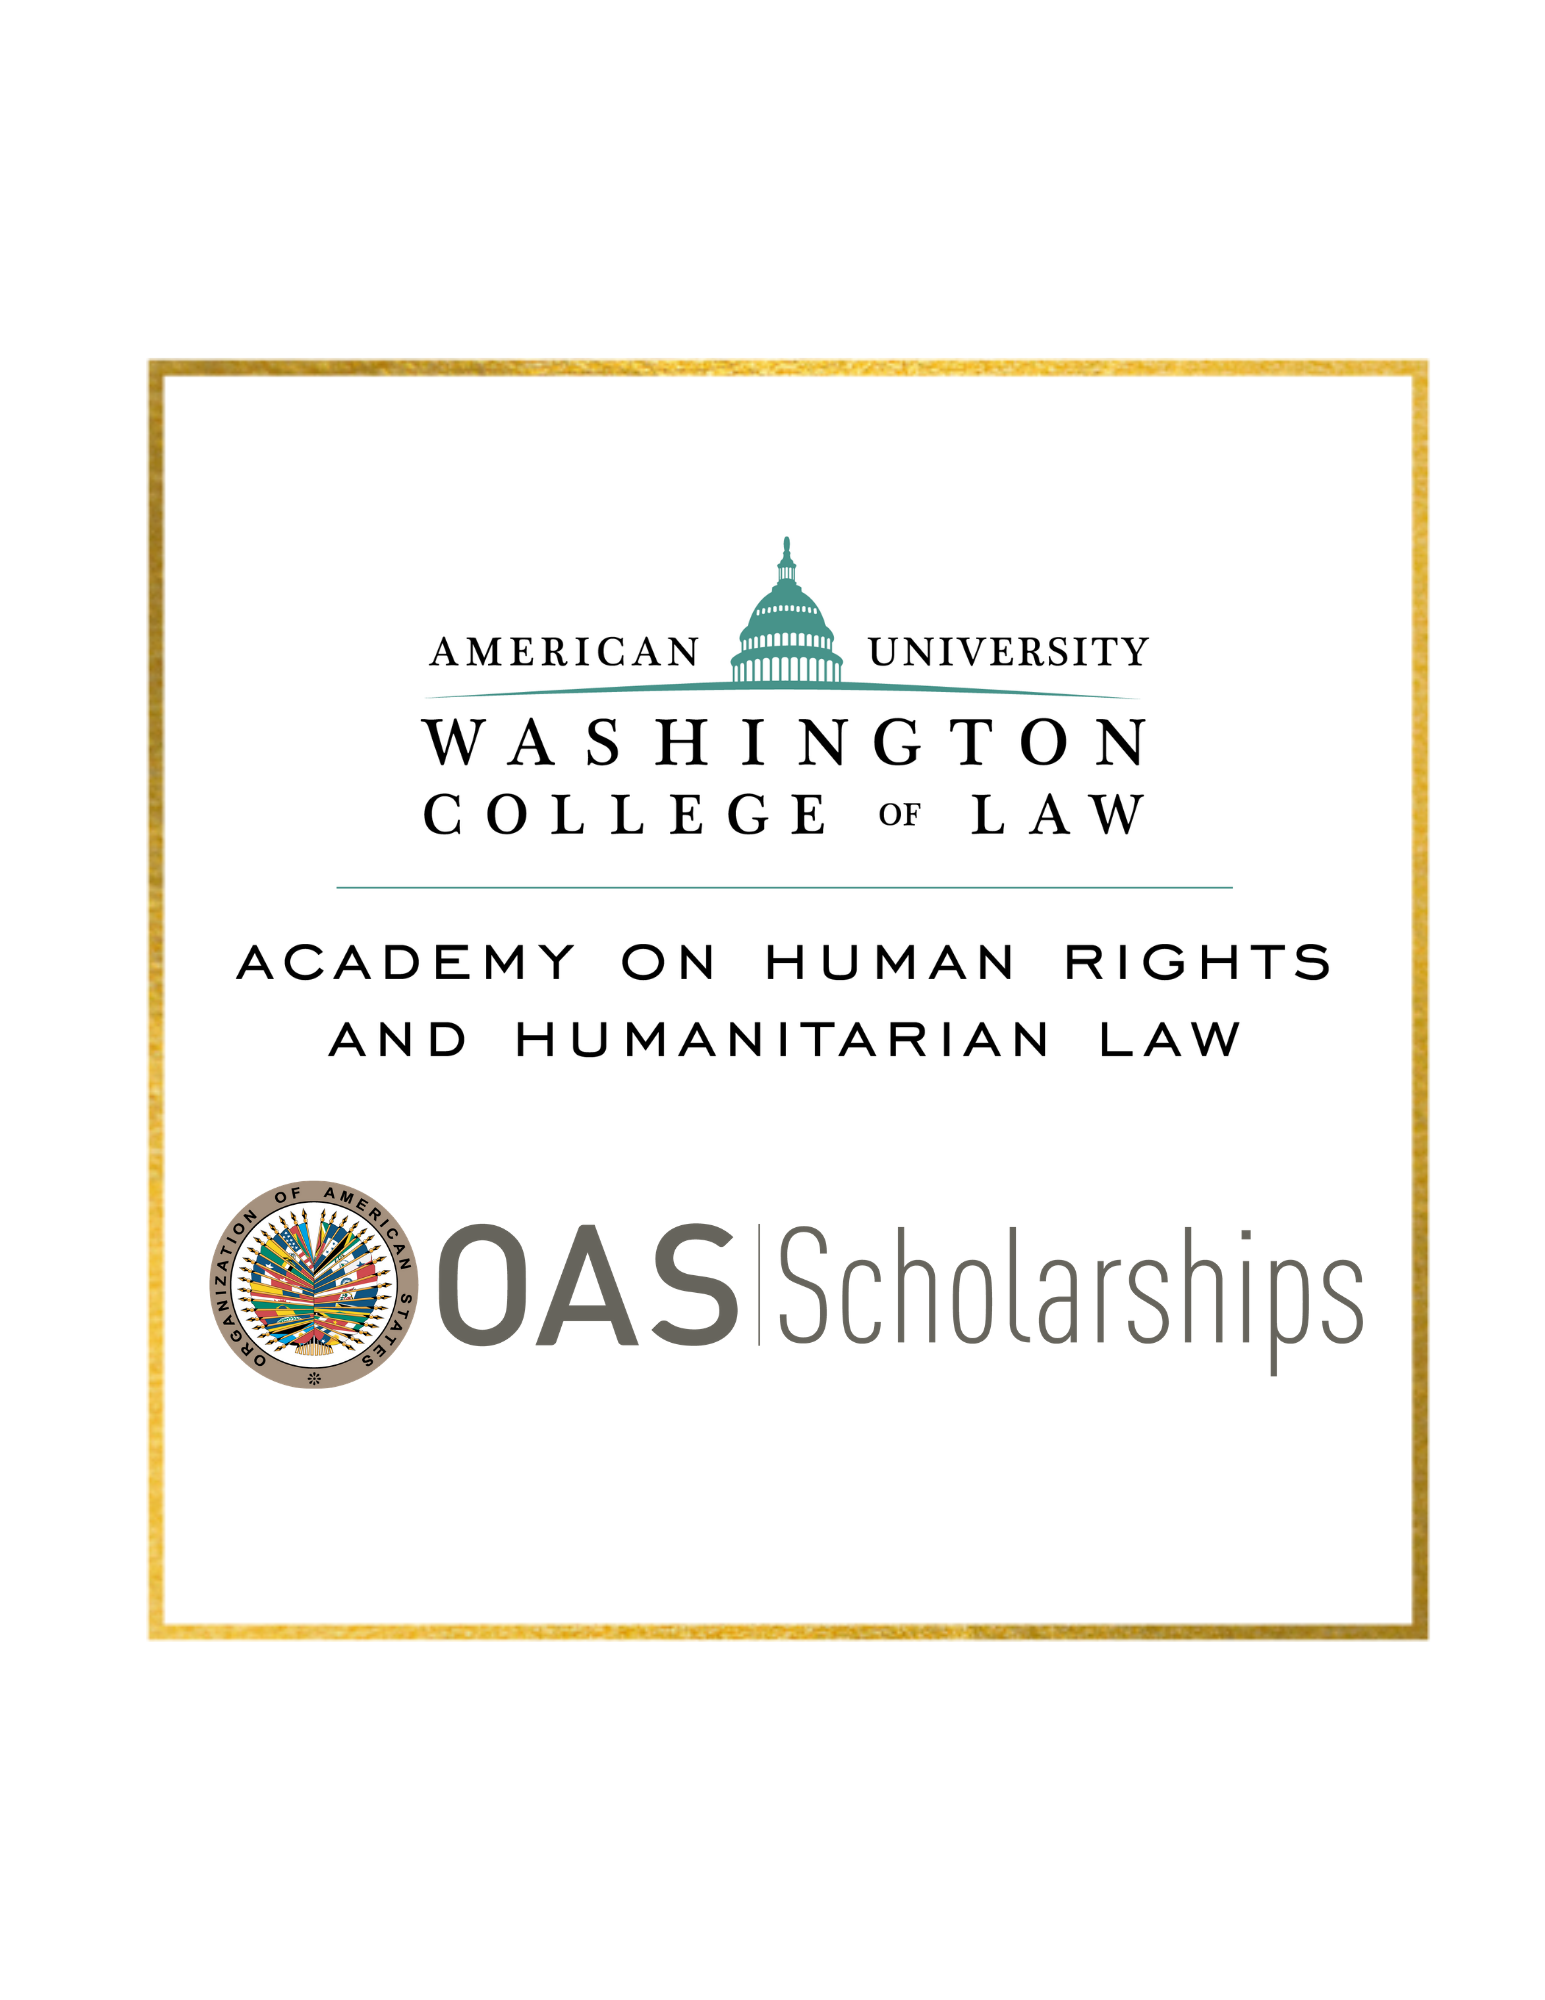 AU and OEA Partnership